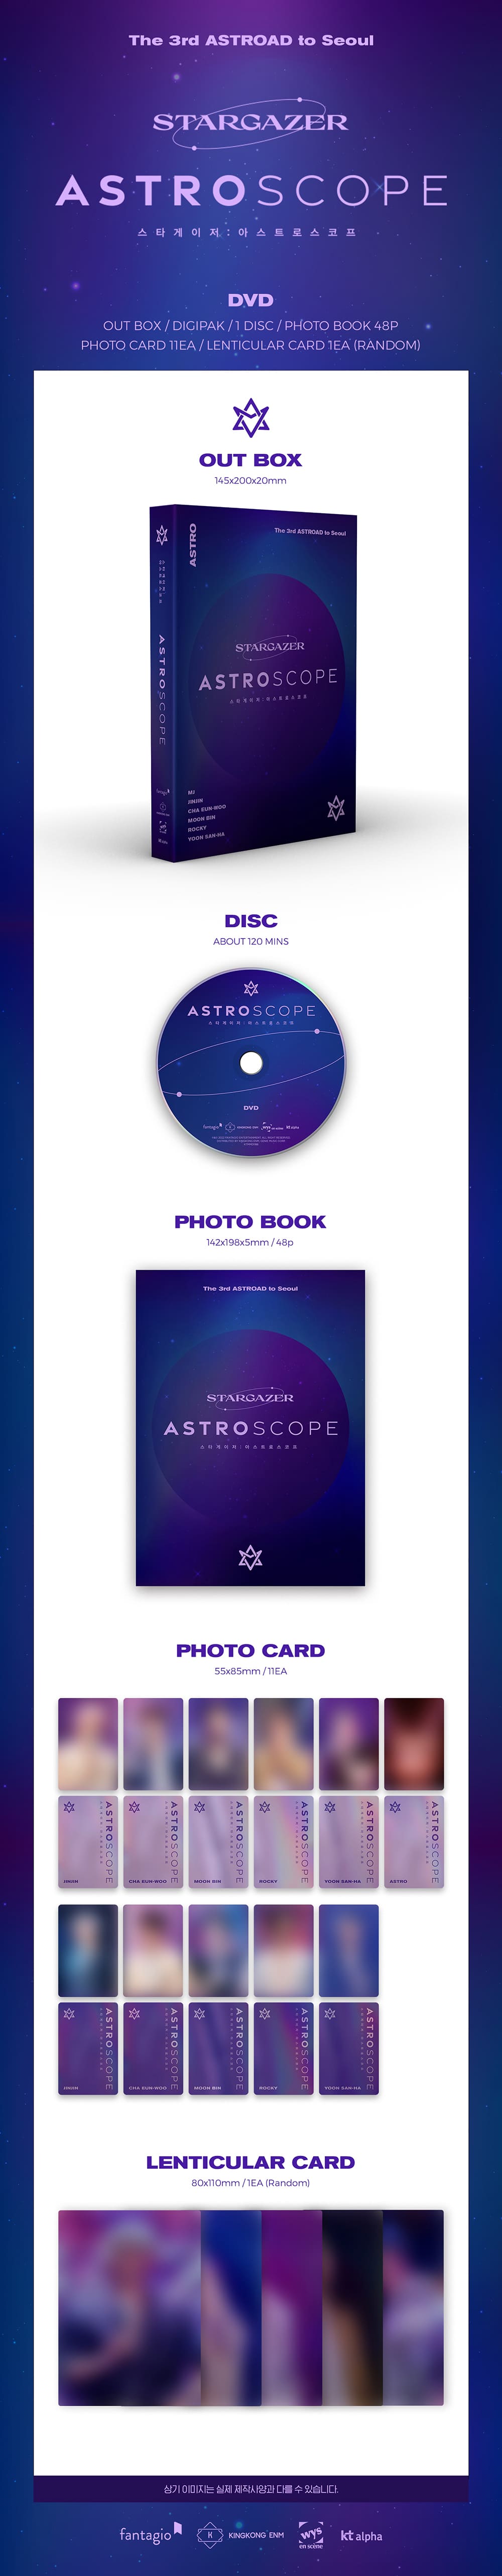 ASTRO - THE 3RD ASTROAD TO SEOUL STARGAZER (DVD Ver.)